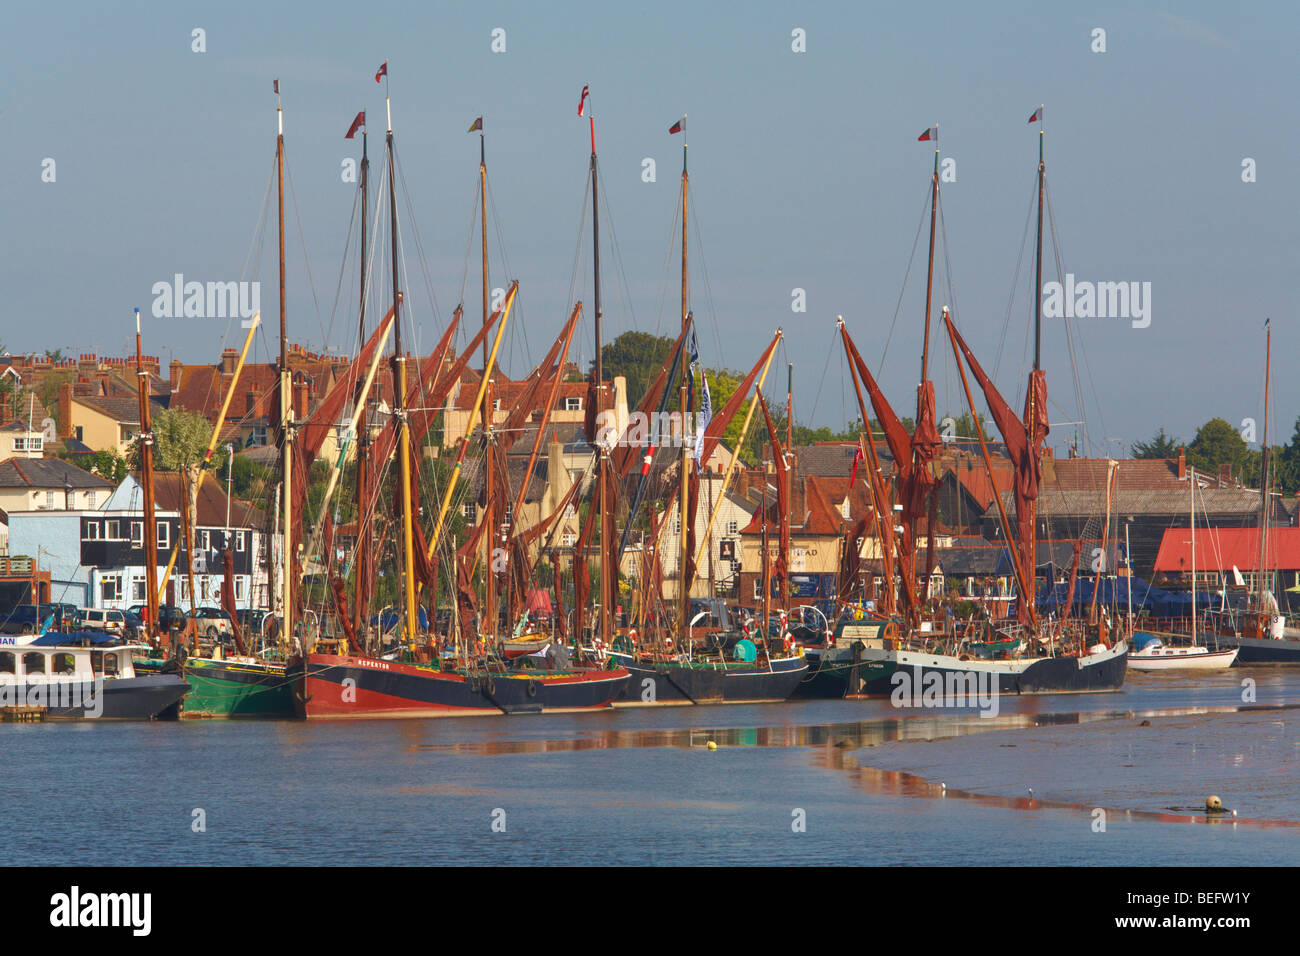 Gran Bretagna Inghilterra Maldon Essex fiume Blackwater Hythe Quay Thames chiatte a vela in banchina Foto Stock